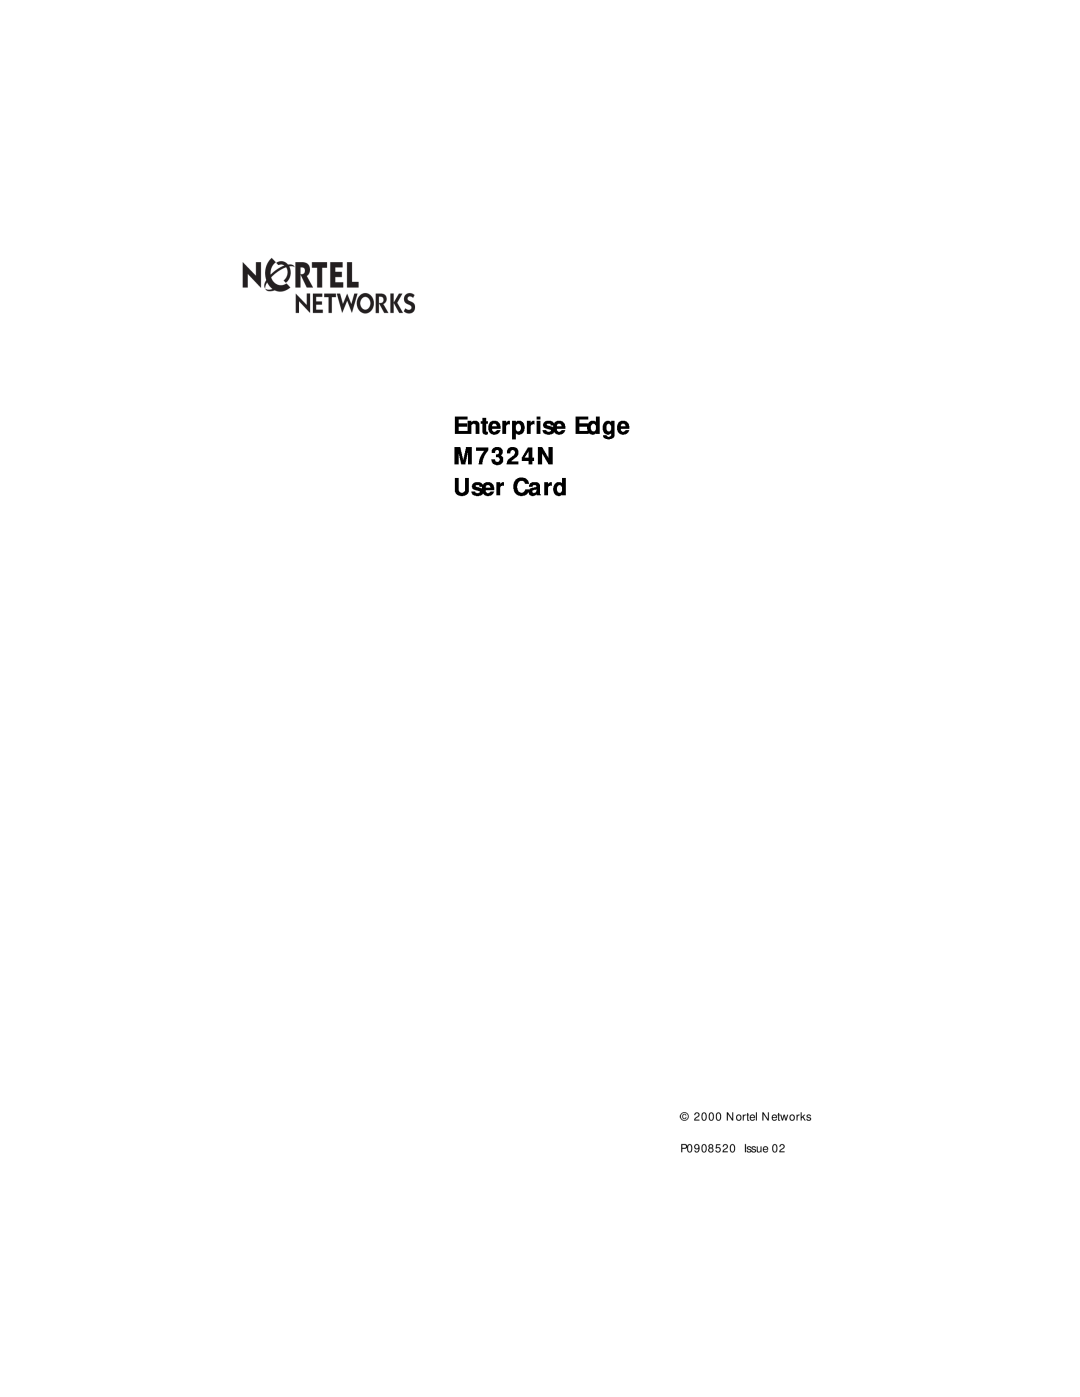 Nortel Networks manual Enterprise Edge M7324N User Card, Nortel Networks P0908520 Issue 